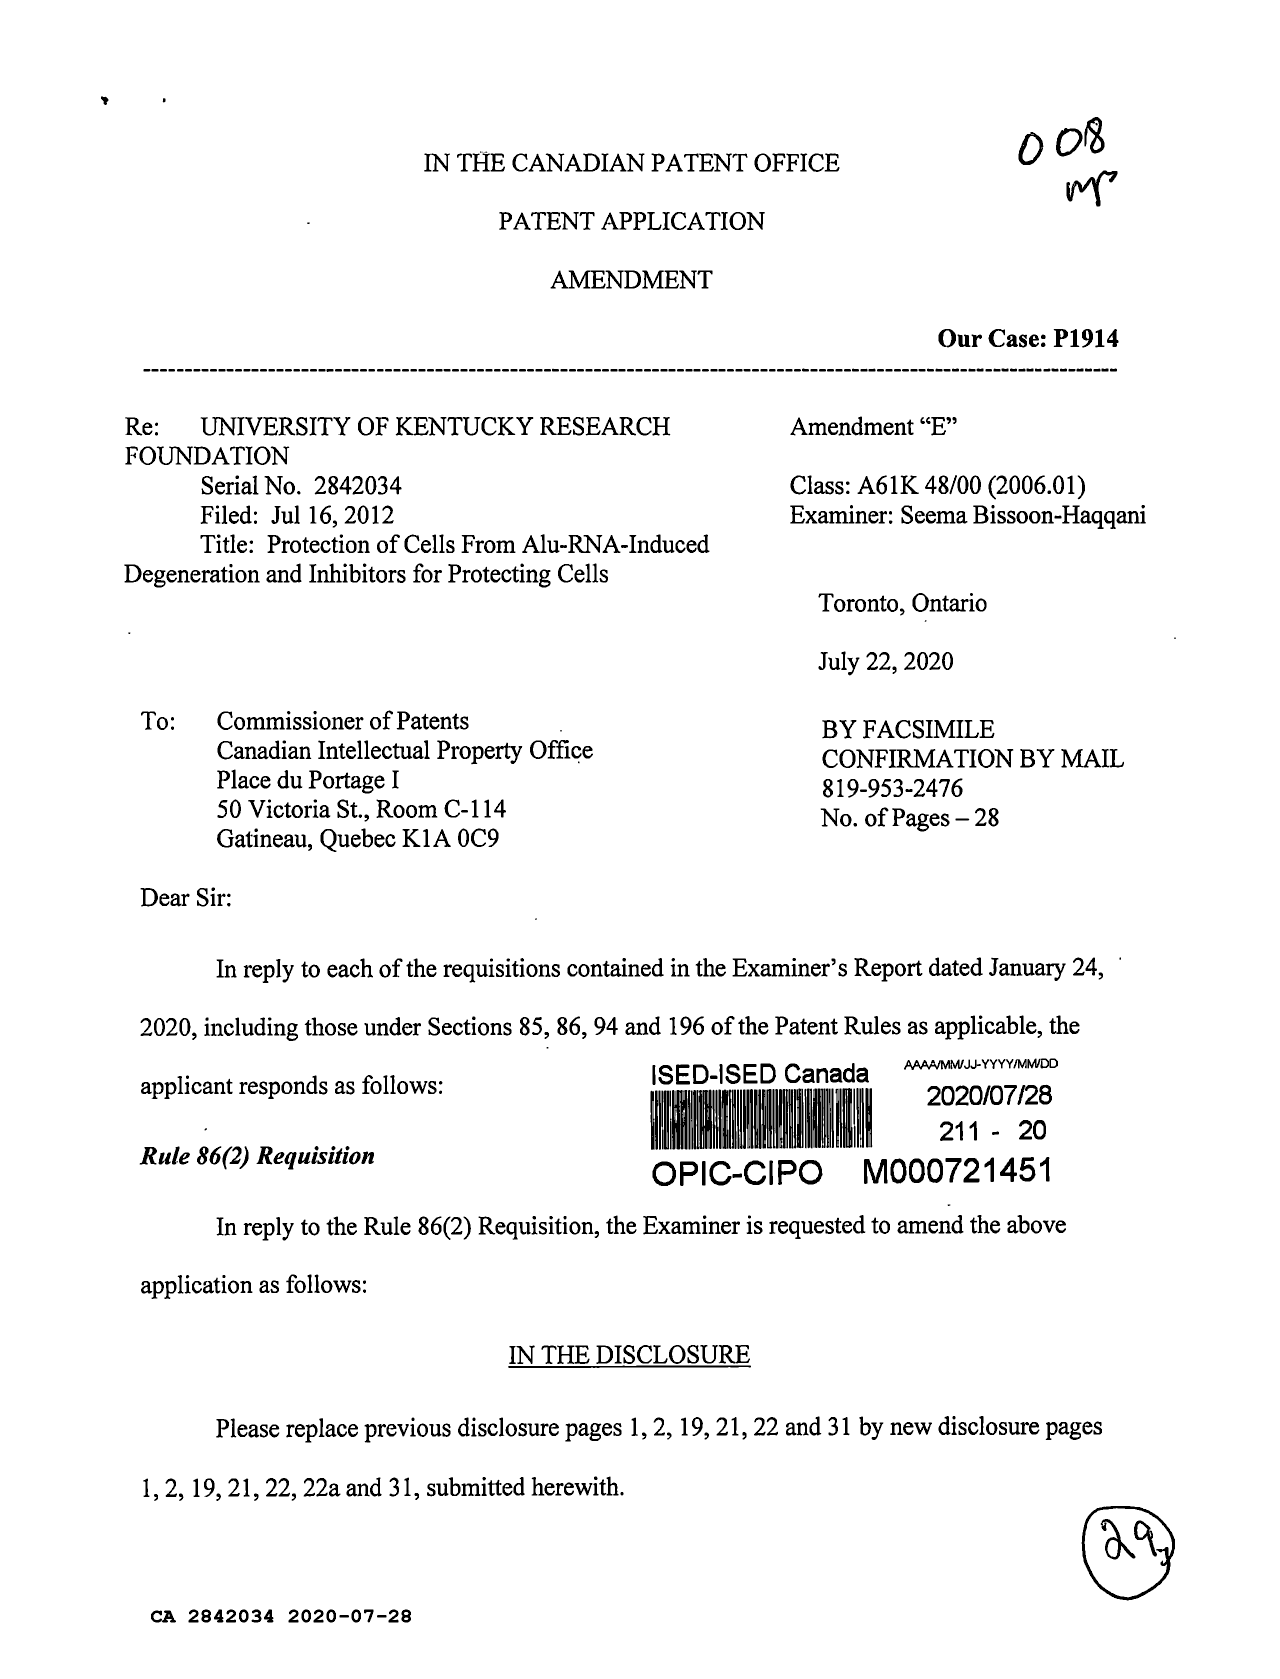 Canadian Patent Document 2842034. Amendment 20200728. Image 1 of 29